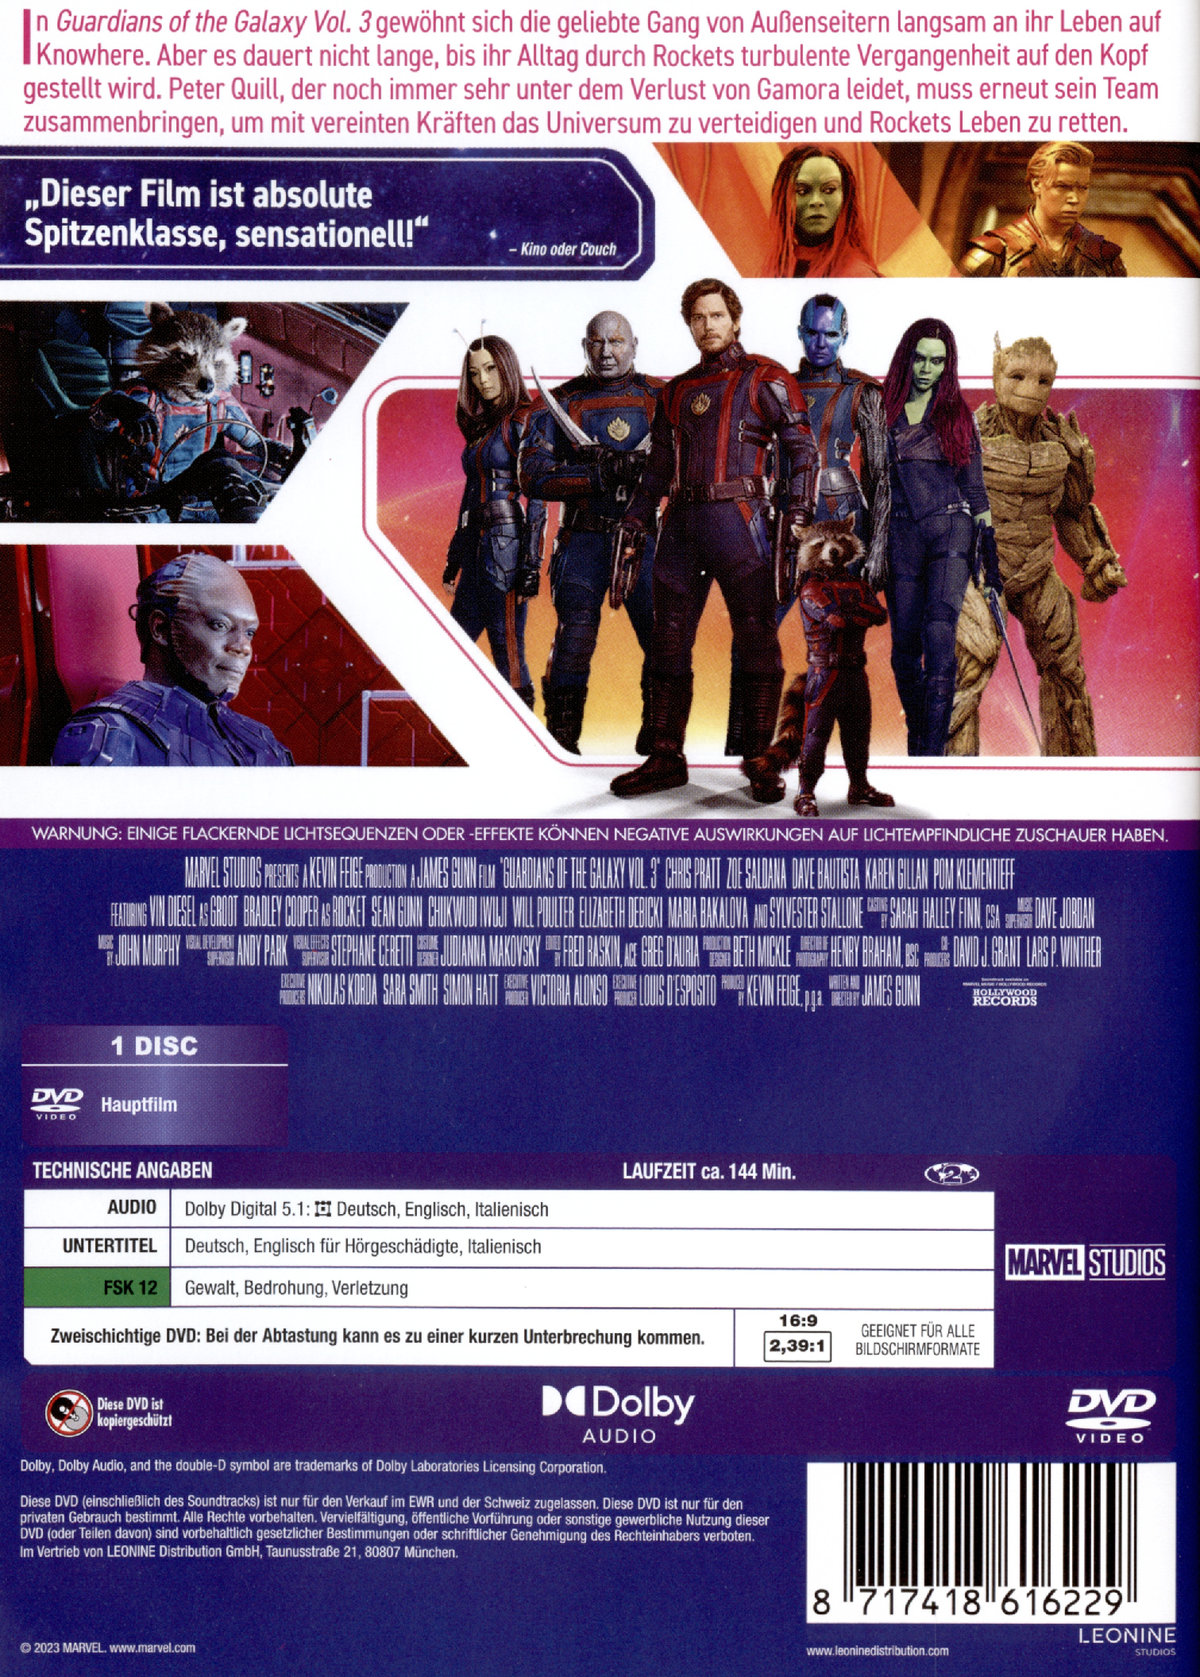 Guardians of the Galaxy Vol. 3  (DVD)